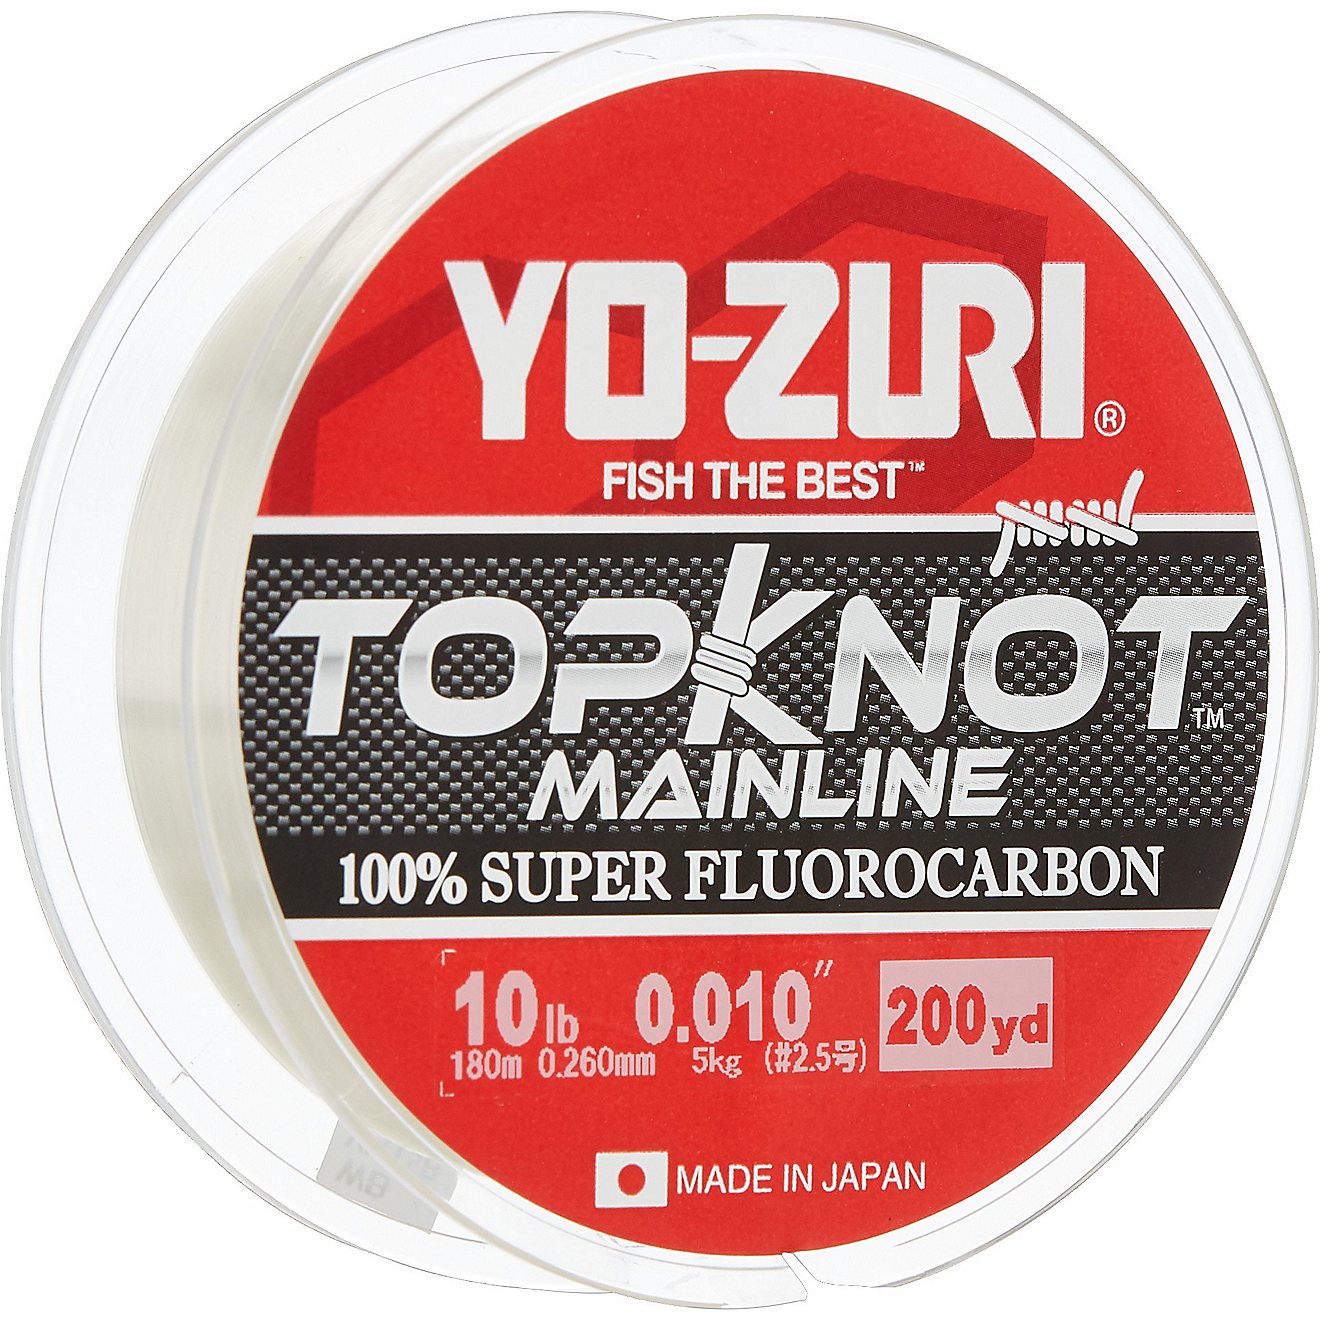 Yo-Zuri TopKnot MainLine 200 yds Fluorocarbon Fishing Line                                                                       - view number 1